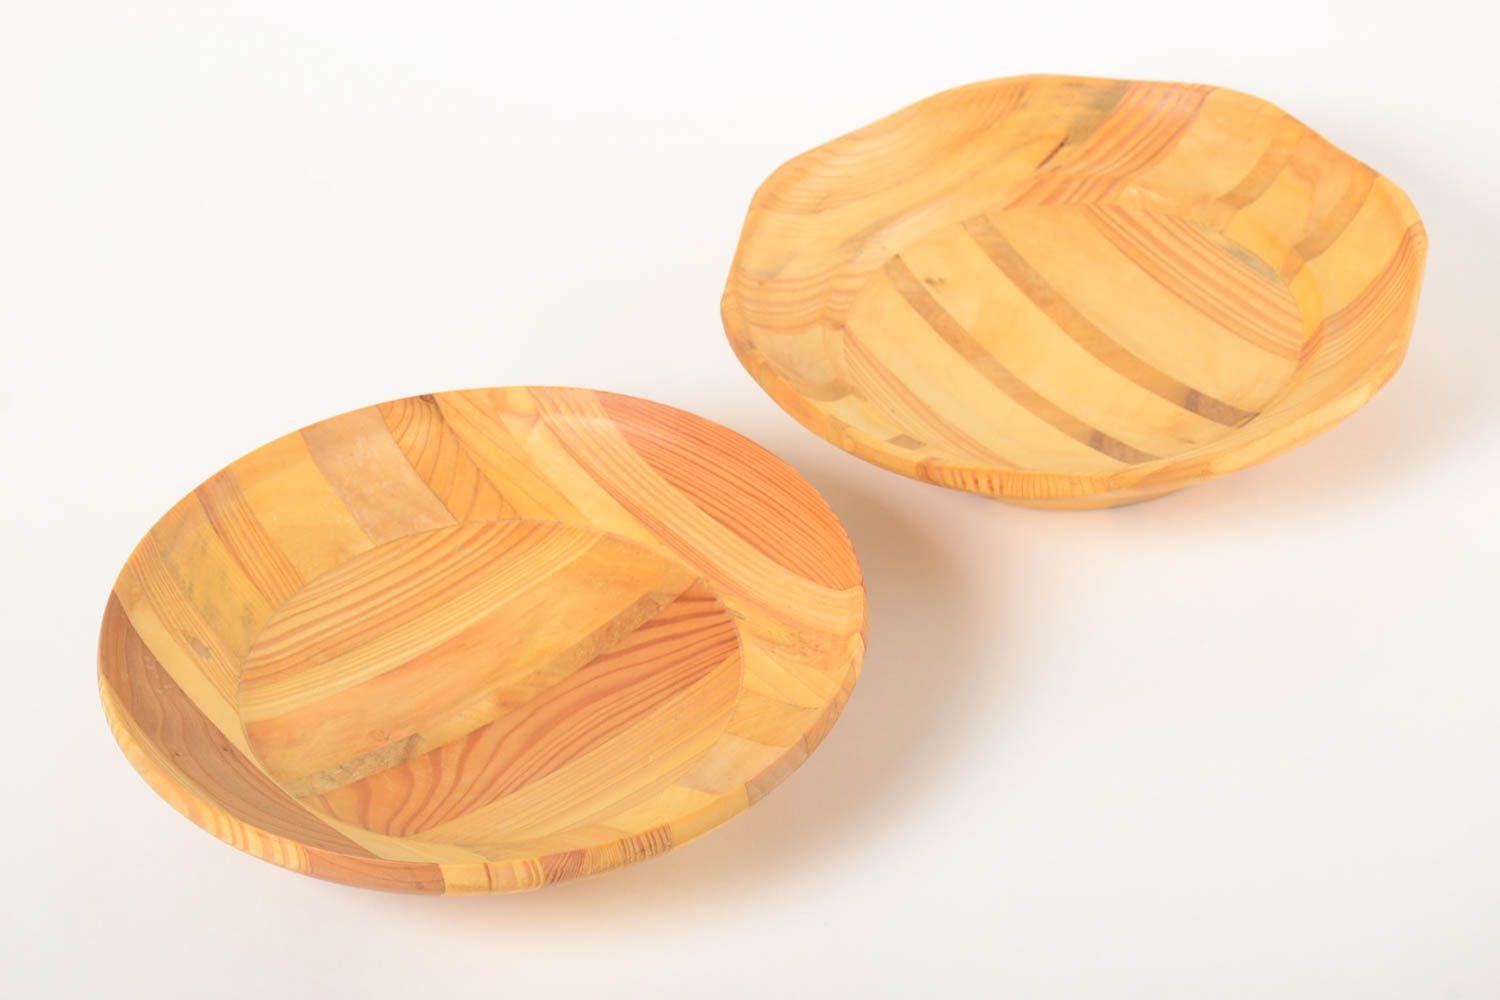 Handmade wooden plate design plate set 2 pieces wood craft kitchen supplies photo 2